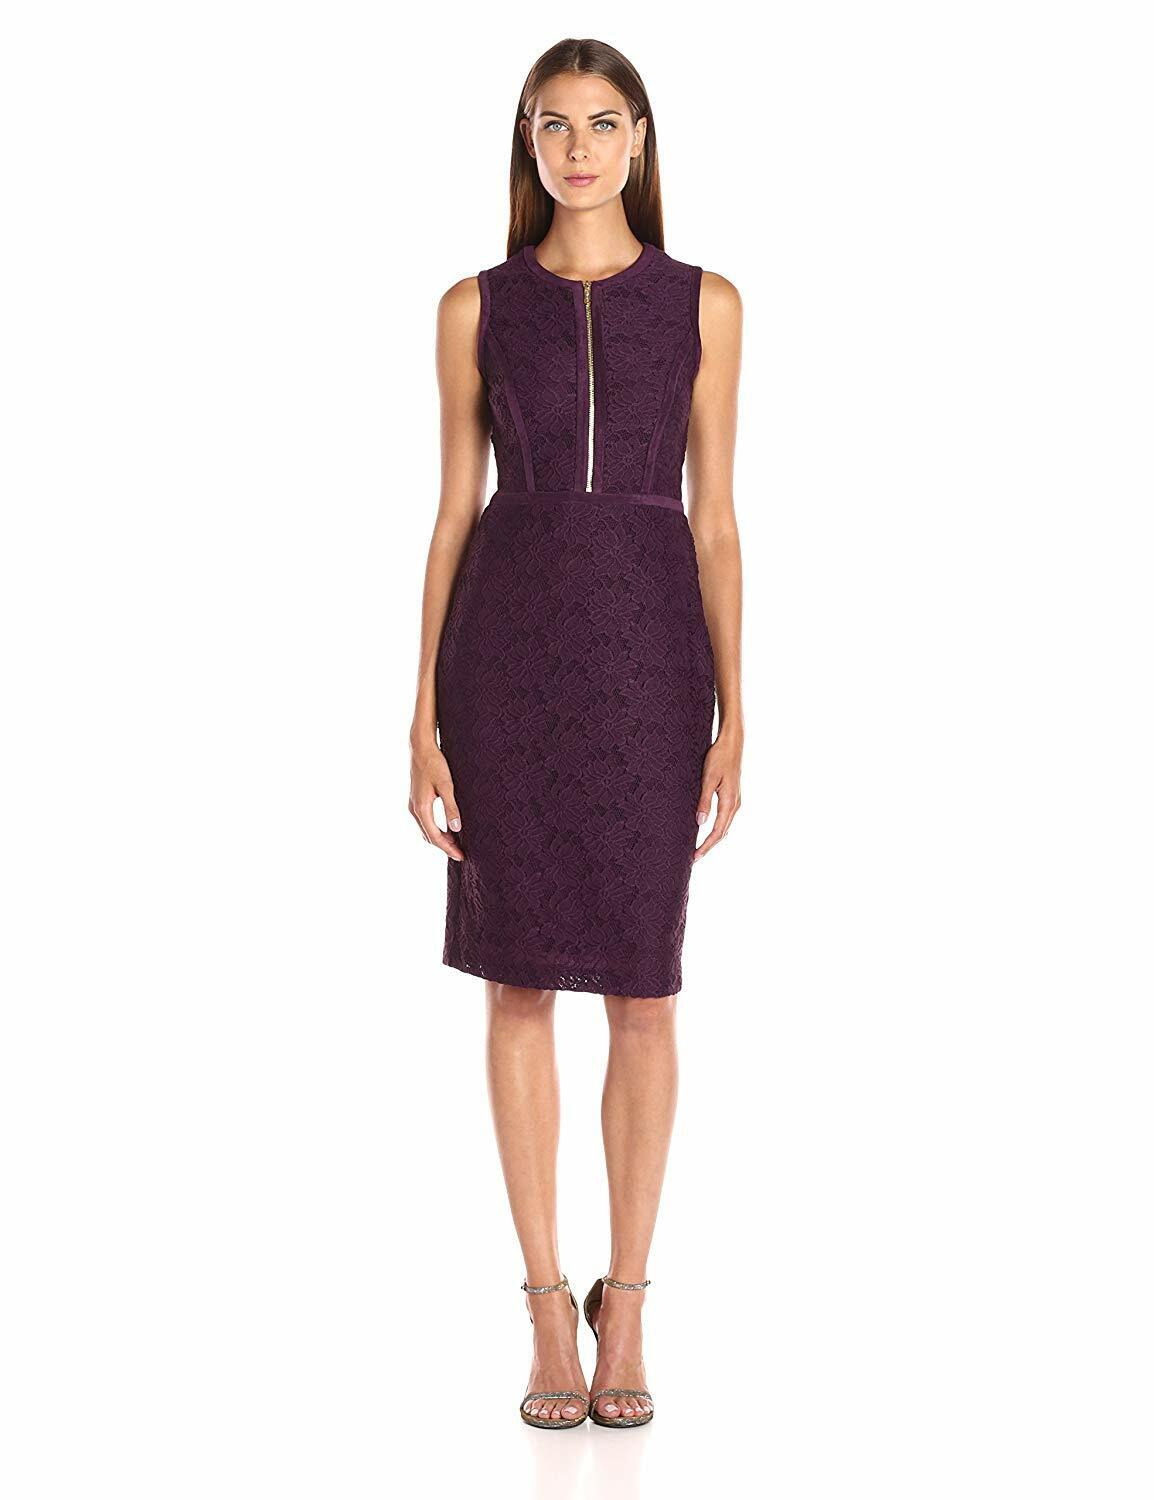 Calvin Klein Plus Sleeveless Zipper Lace Sheath Dress - 16 - Aubergine  #4860 700289706975 | eBay